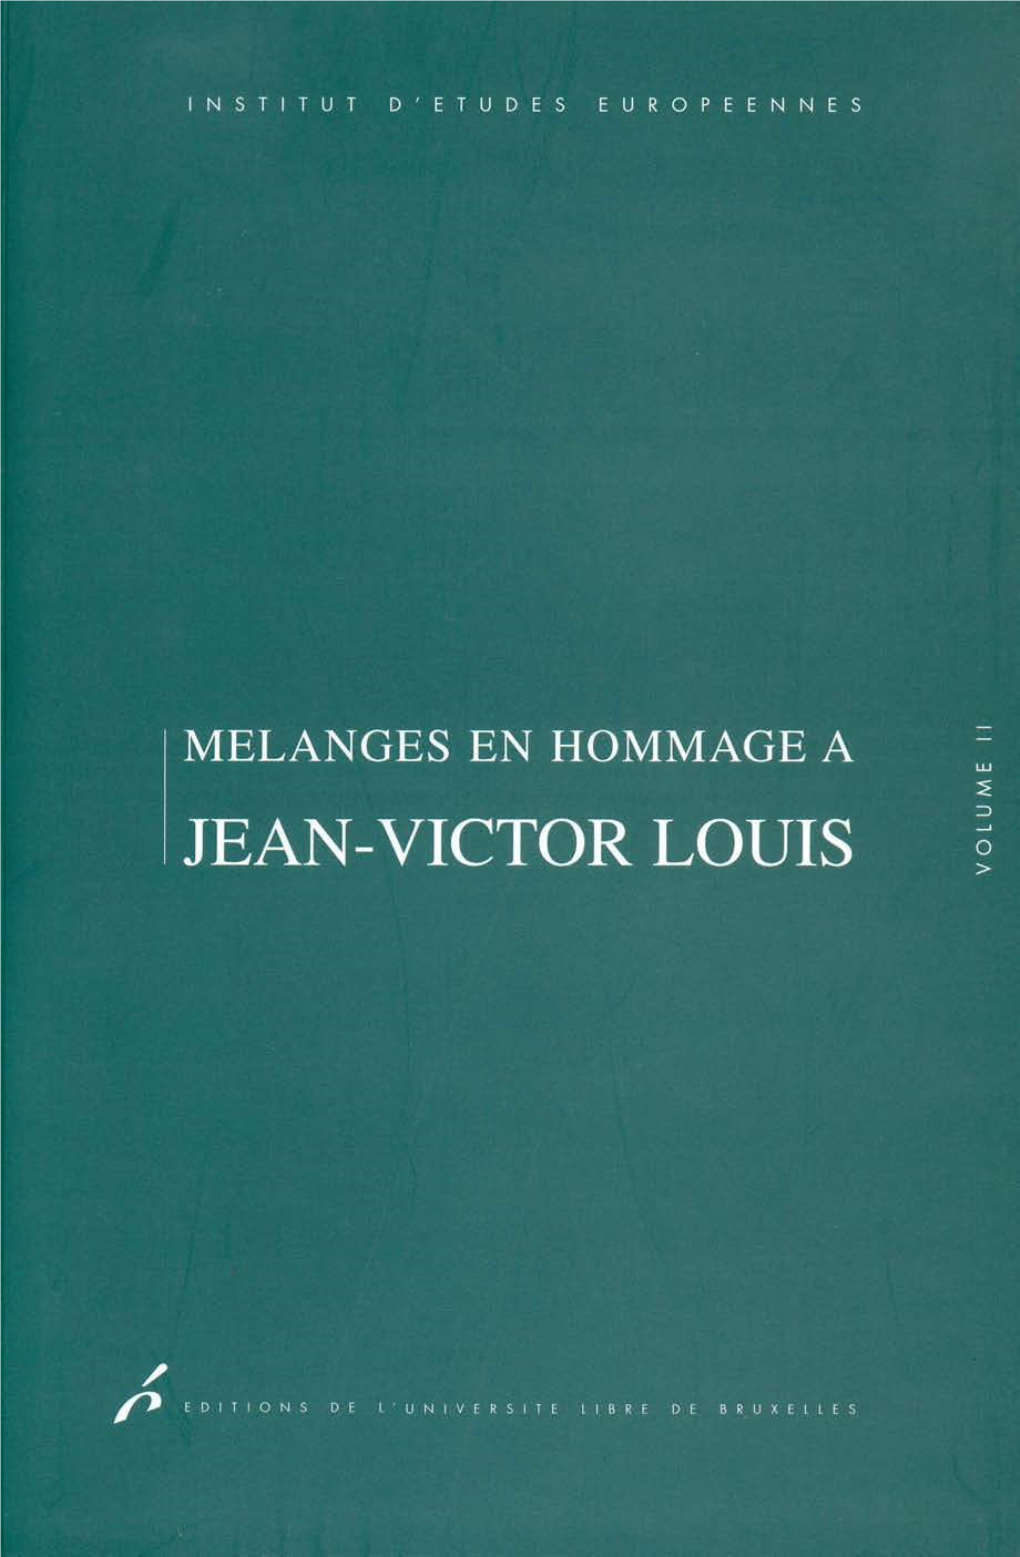 Jean-Victor Louis